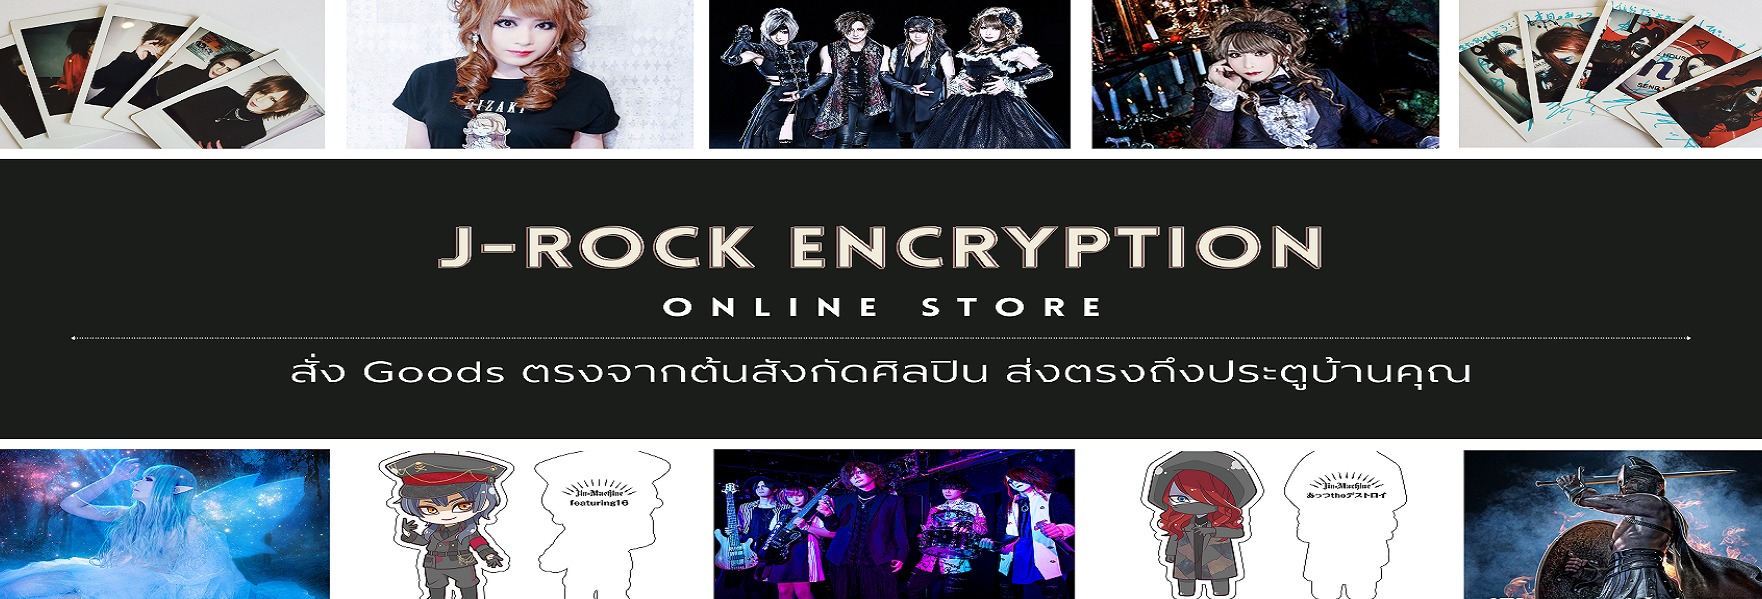 J-ROCK Encryption Online Store สั่ง Goods ตรงจากต้นสังกัดศิลปิน ส่งตรงถึงประตูบ้านคุณ